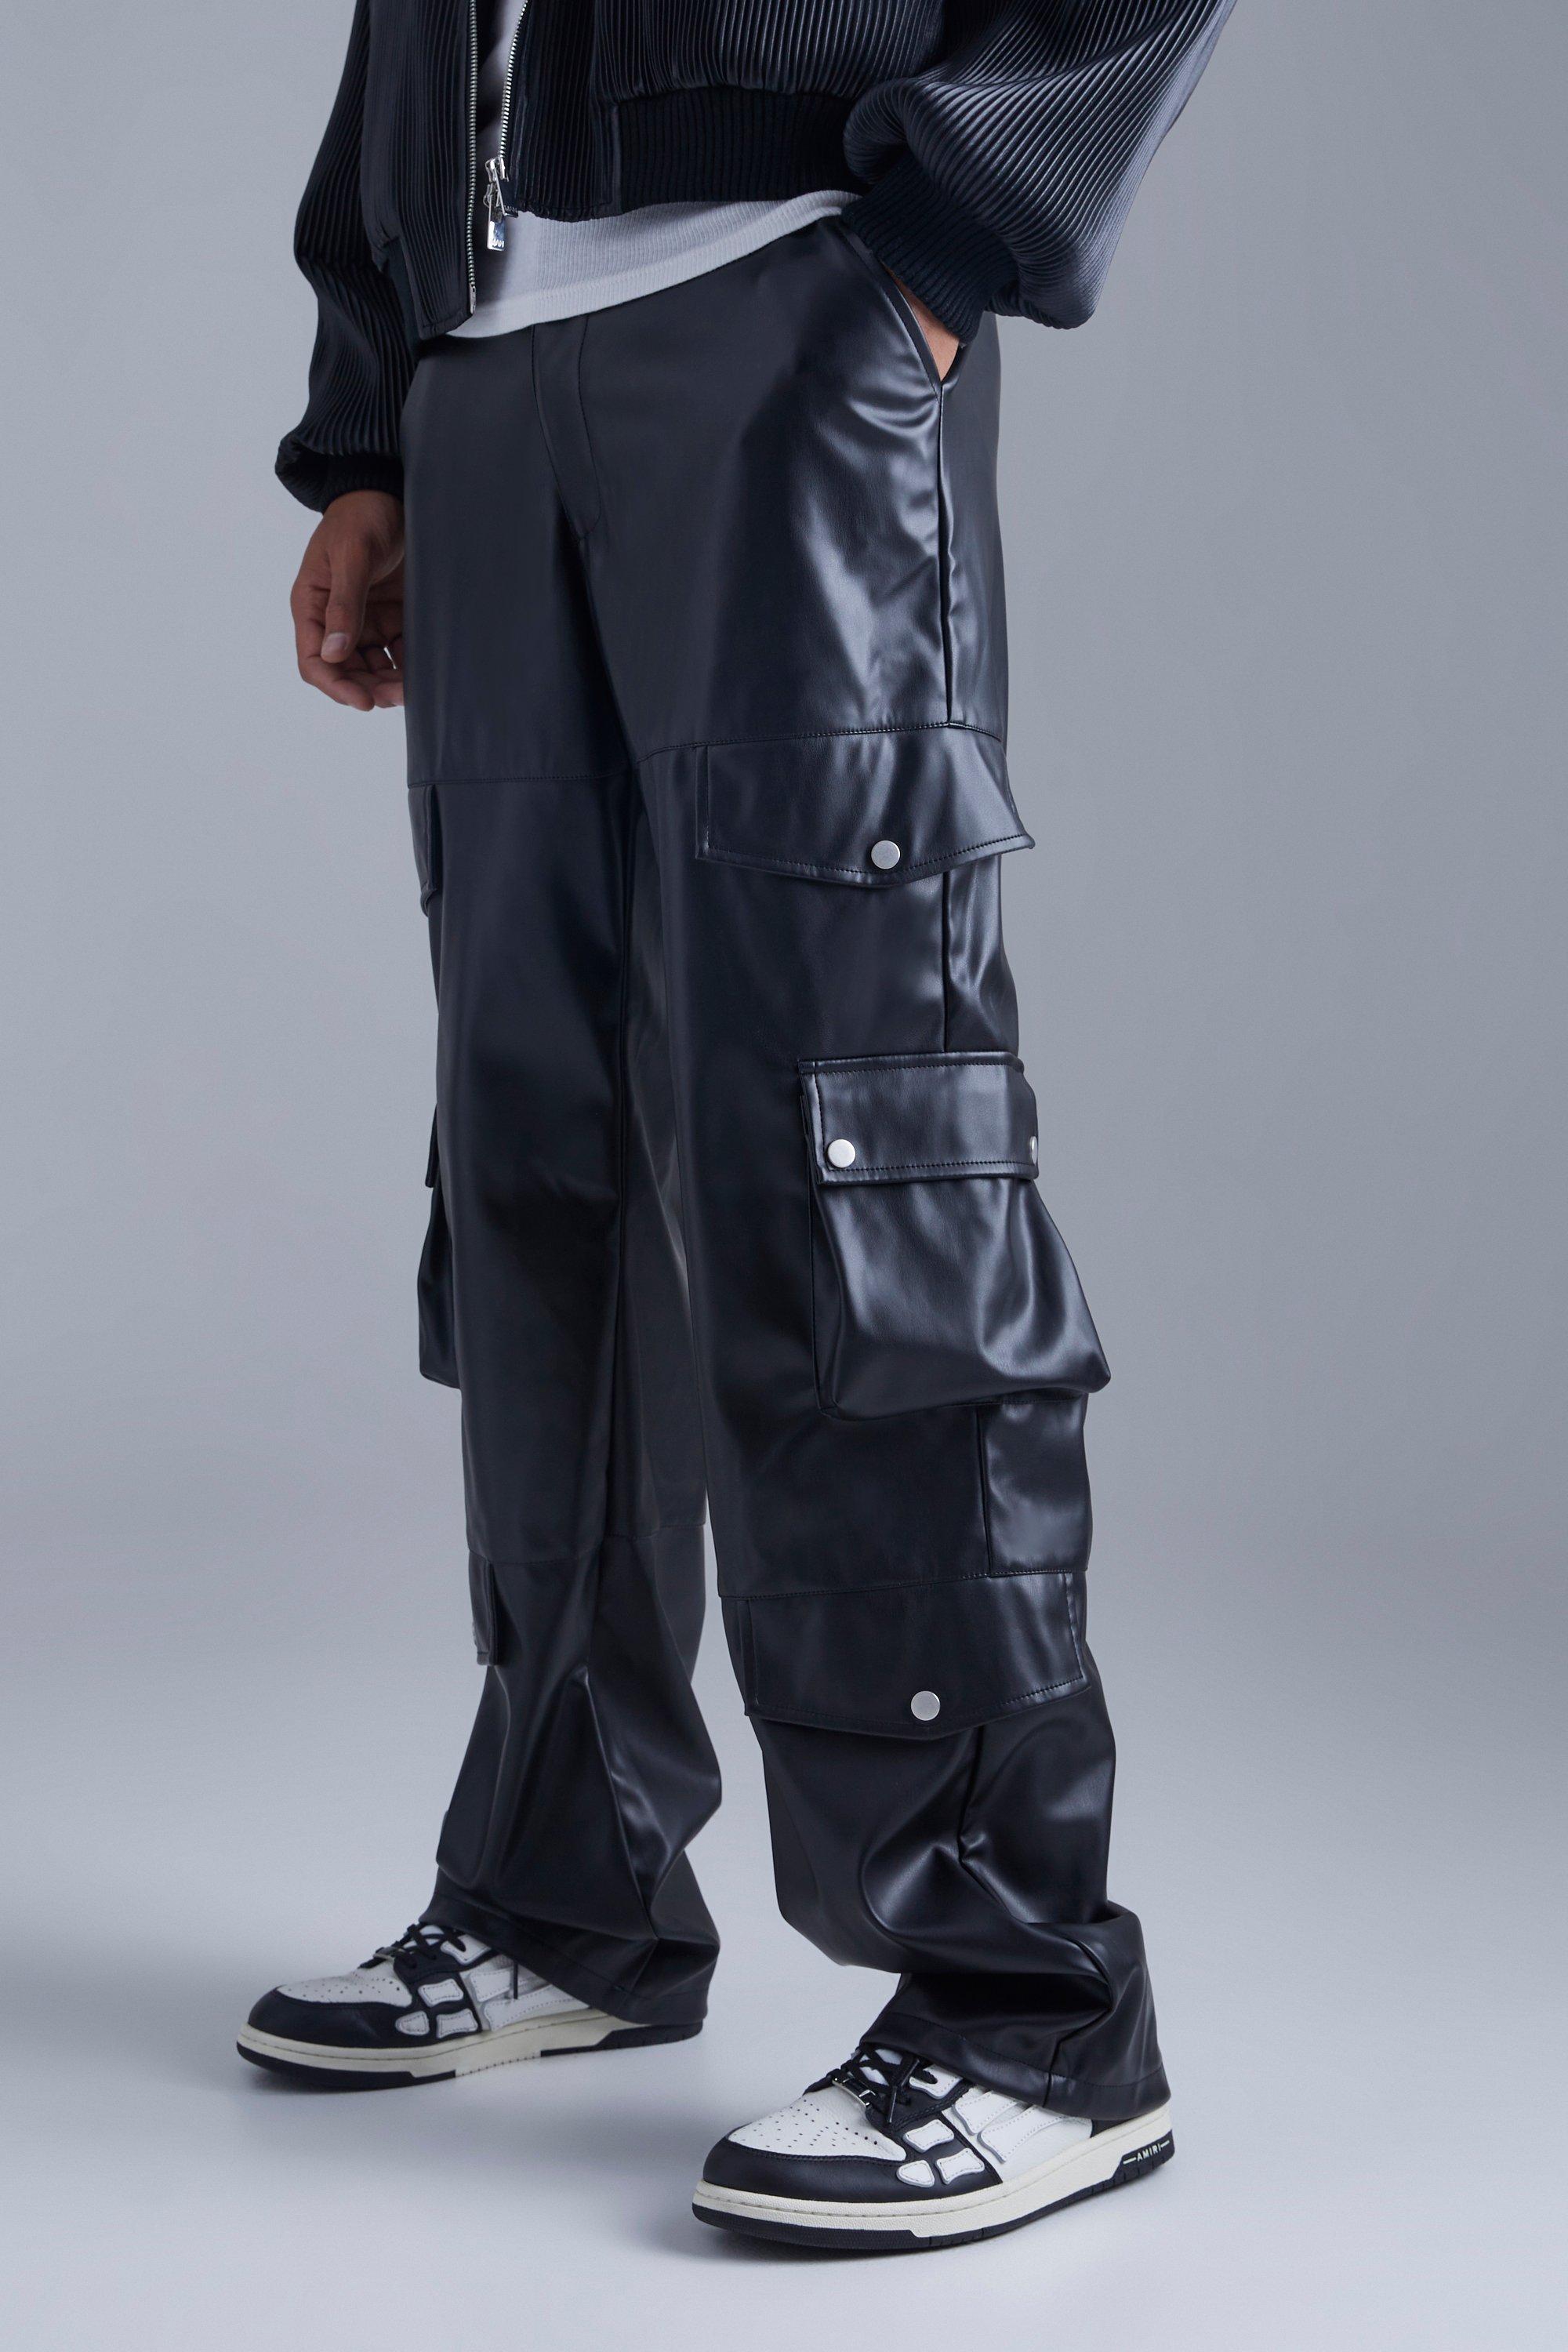 boohooMAN Tall Baggy Tie Dye Parachute Trouser - Men's Plain Trousers